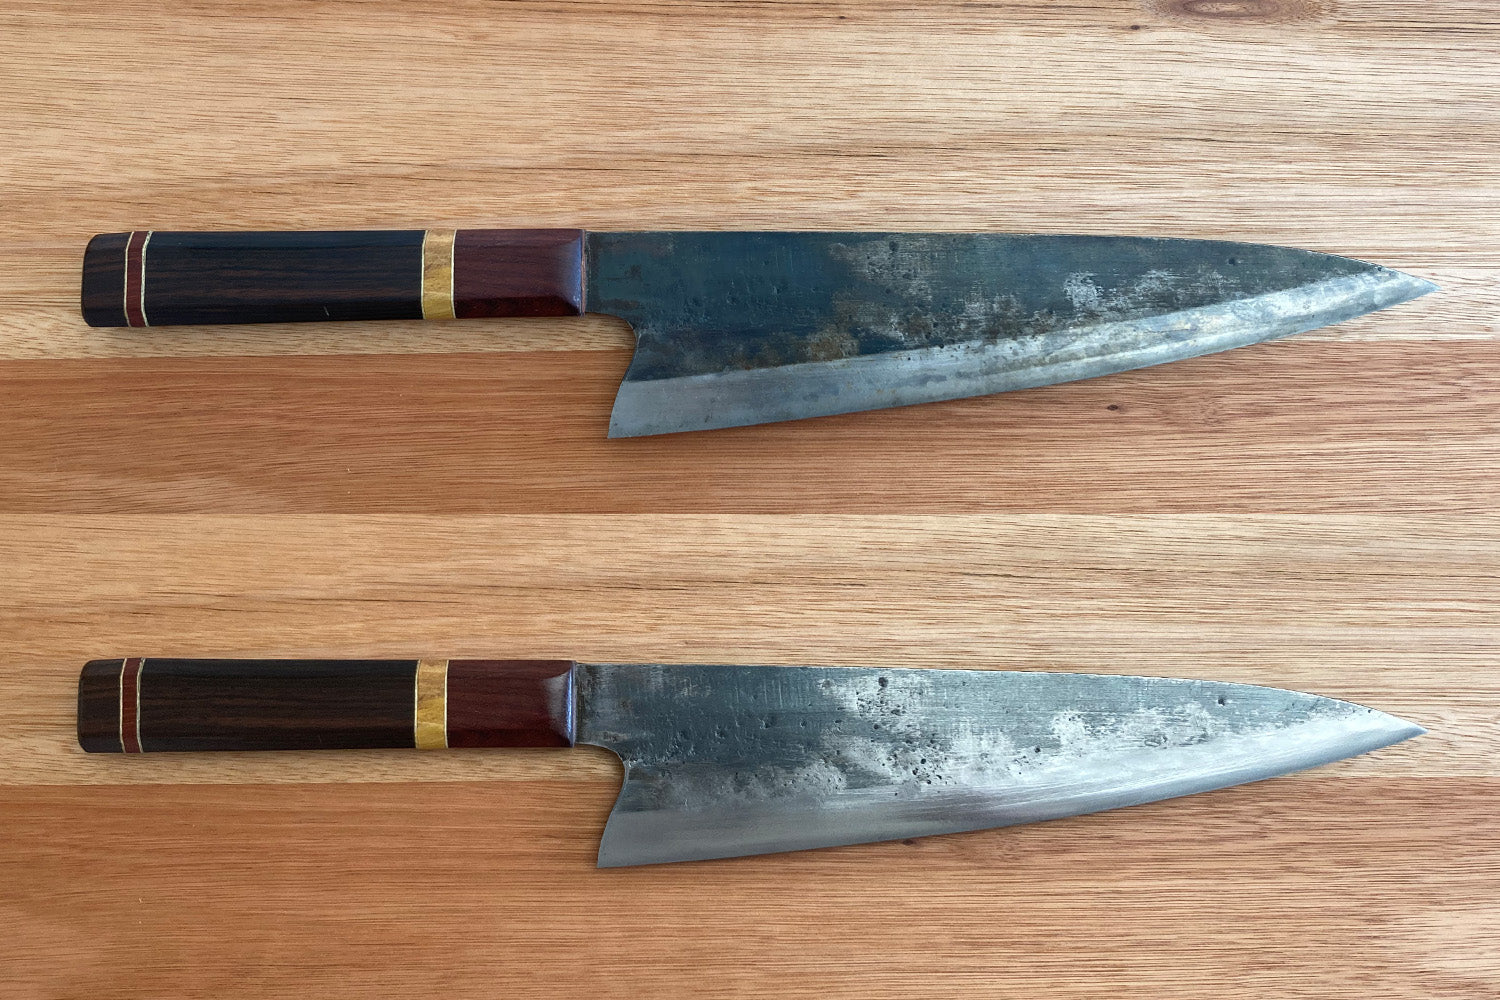 NINJA KITCHEN KNIFE BLOCK HOLDER FIZ (one knife missing)